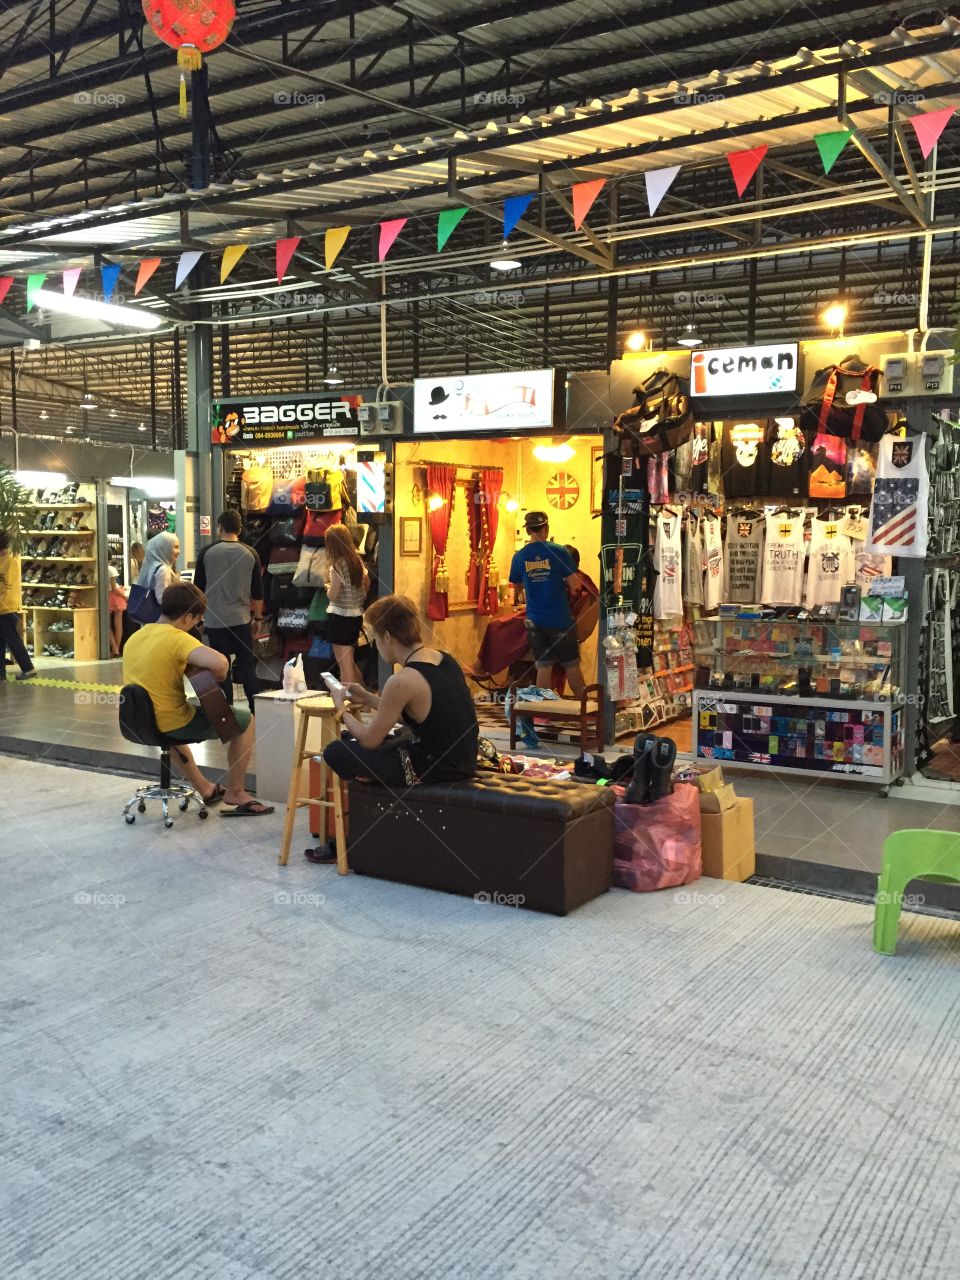 Shops in Hat Yai Thailand. Taken on 18 April 2015